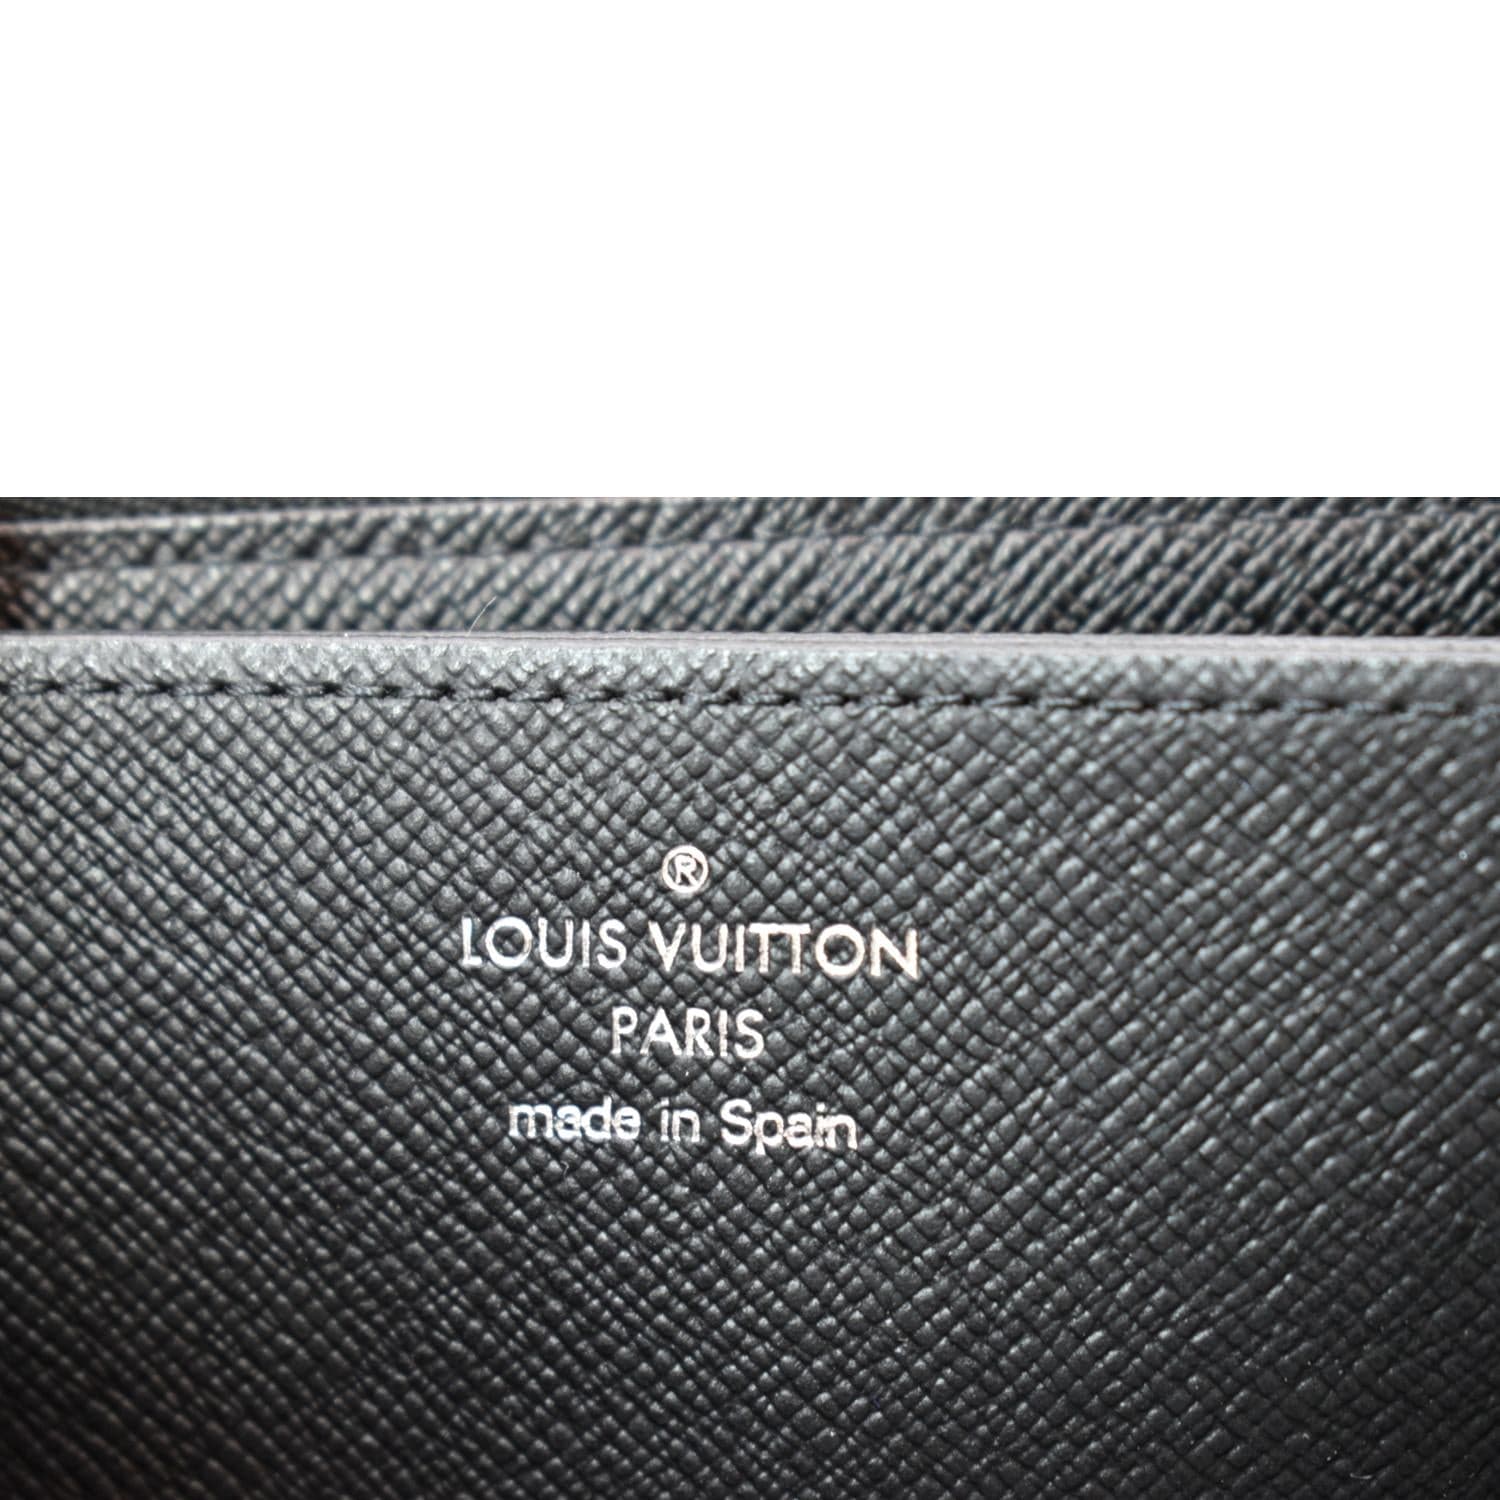 Louis Vuitton x Supreme Black 2017 Leather Zippy Organizer Wallet